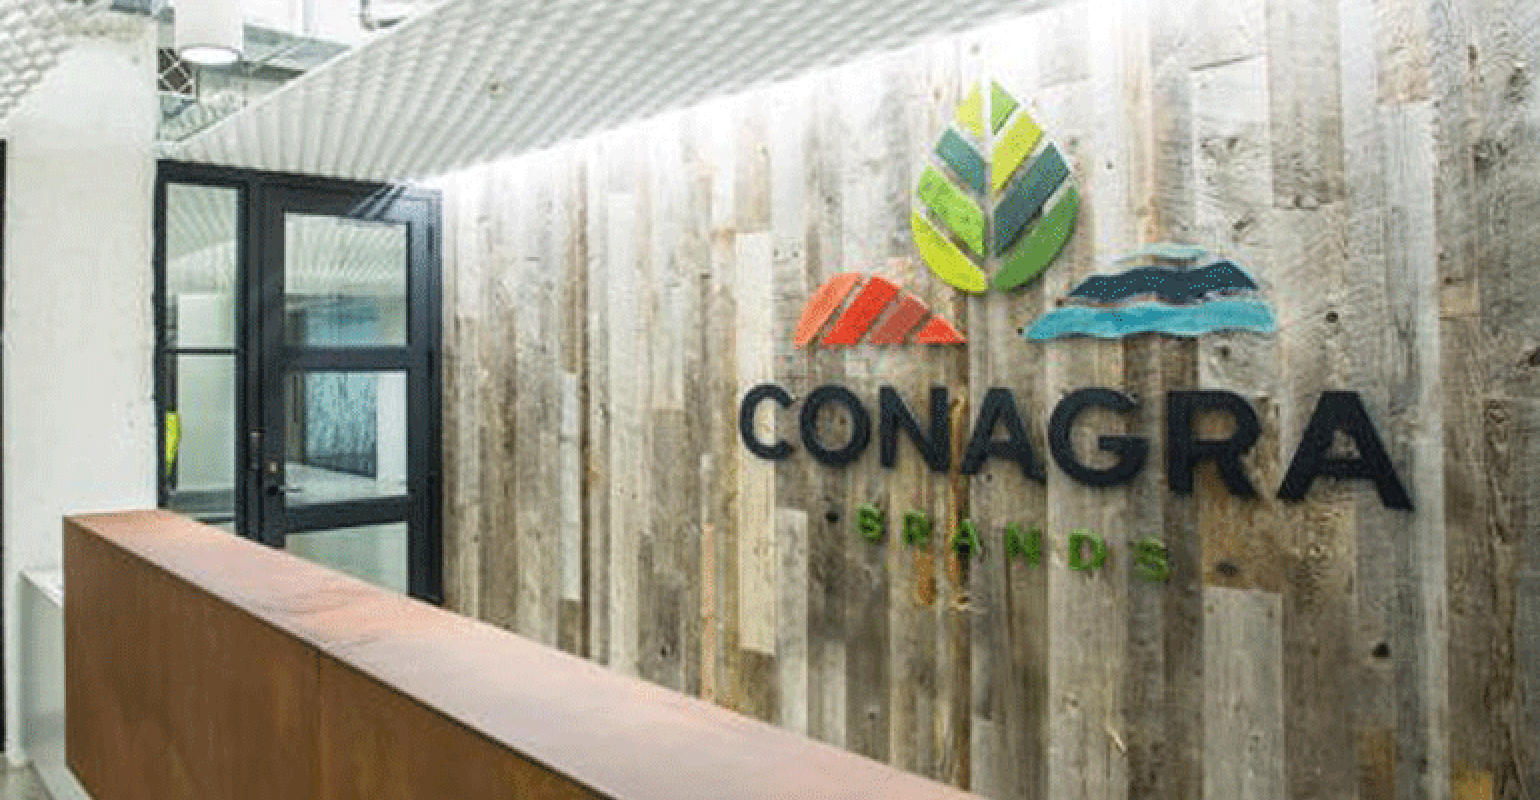 Conagra to buy Pinnacle Foods for $ billion | Supermarket News